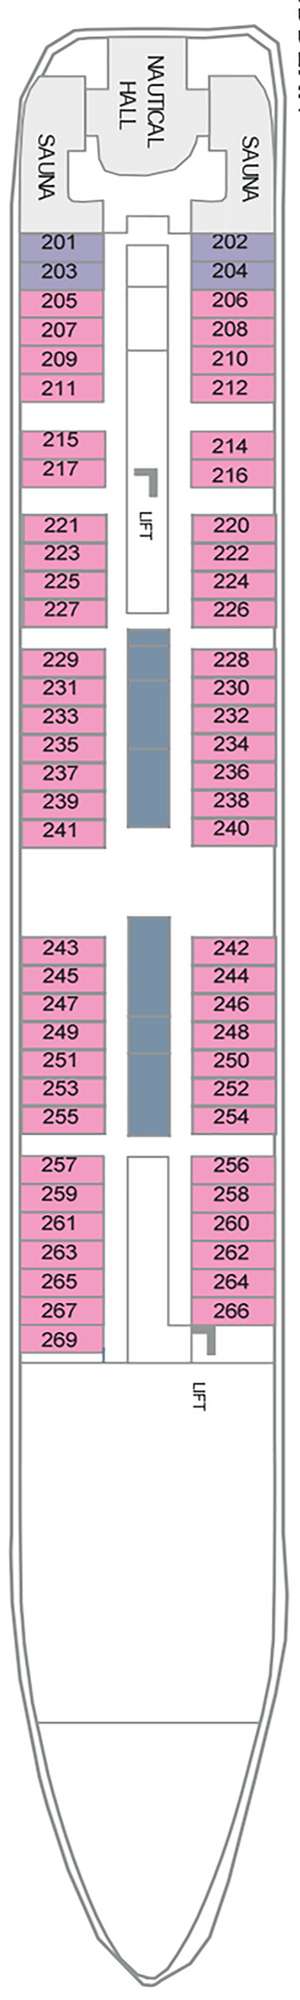 Deck plan for Club Med 2